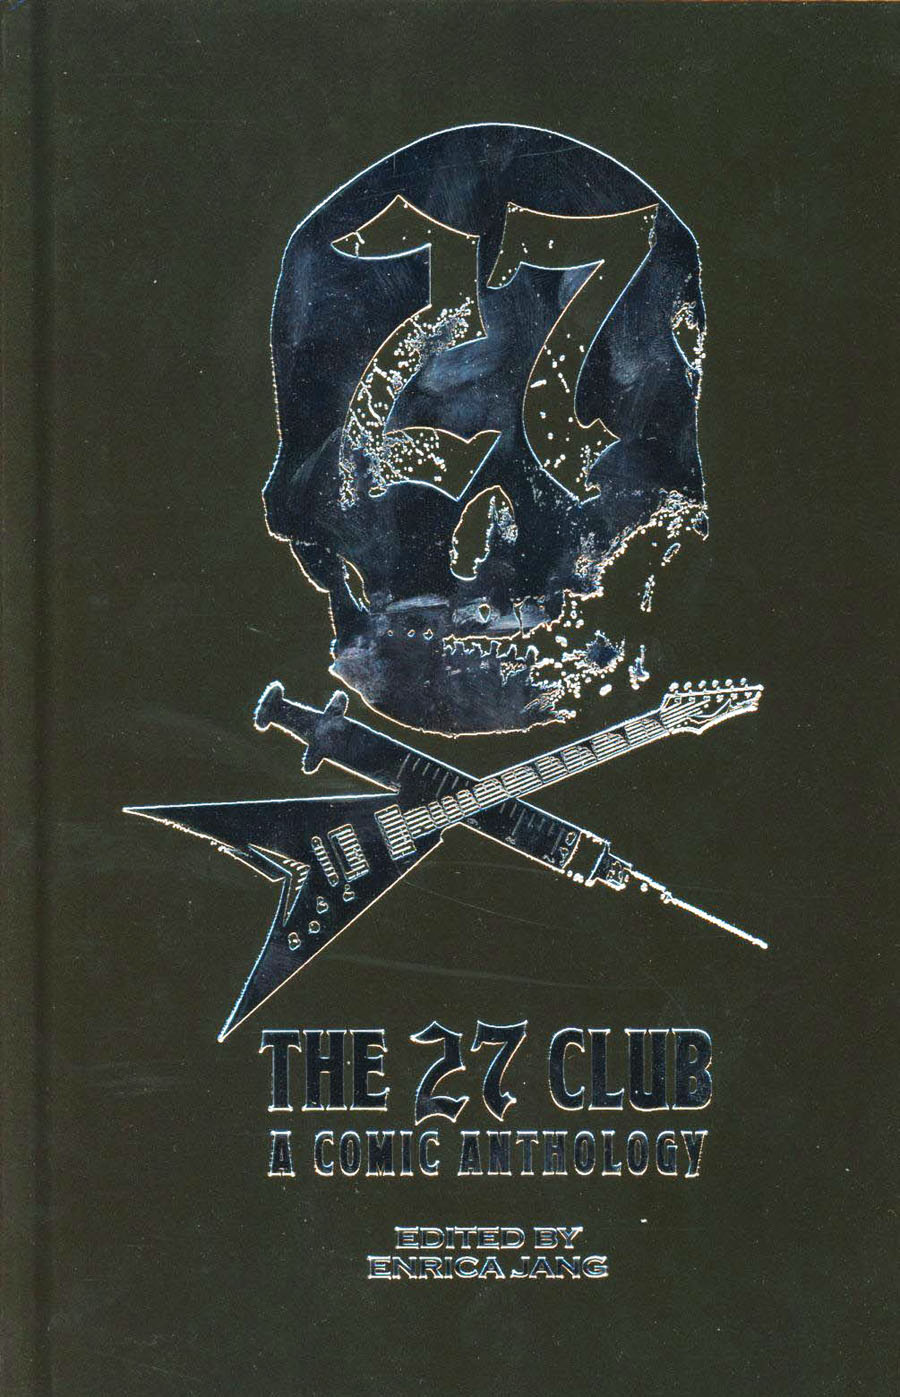 27 Club A Comic Anthology HC